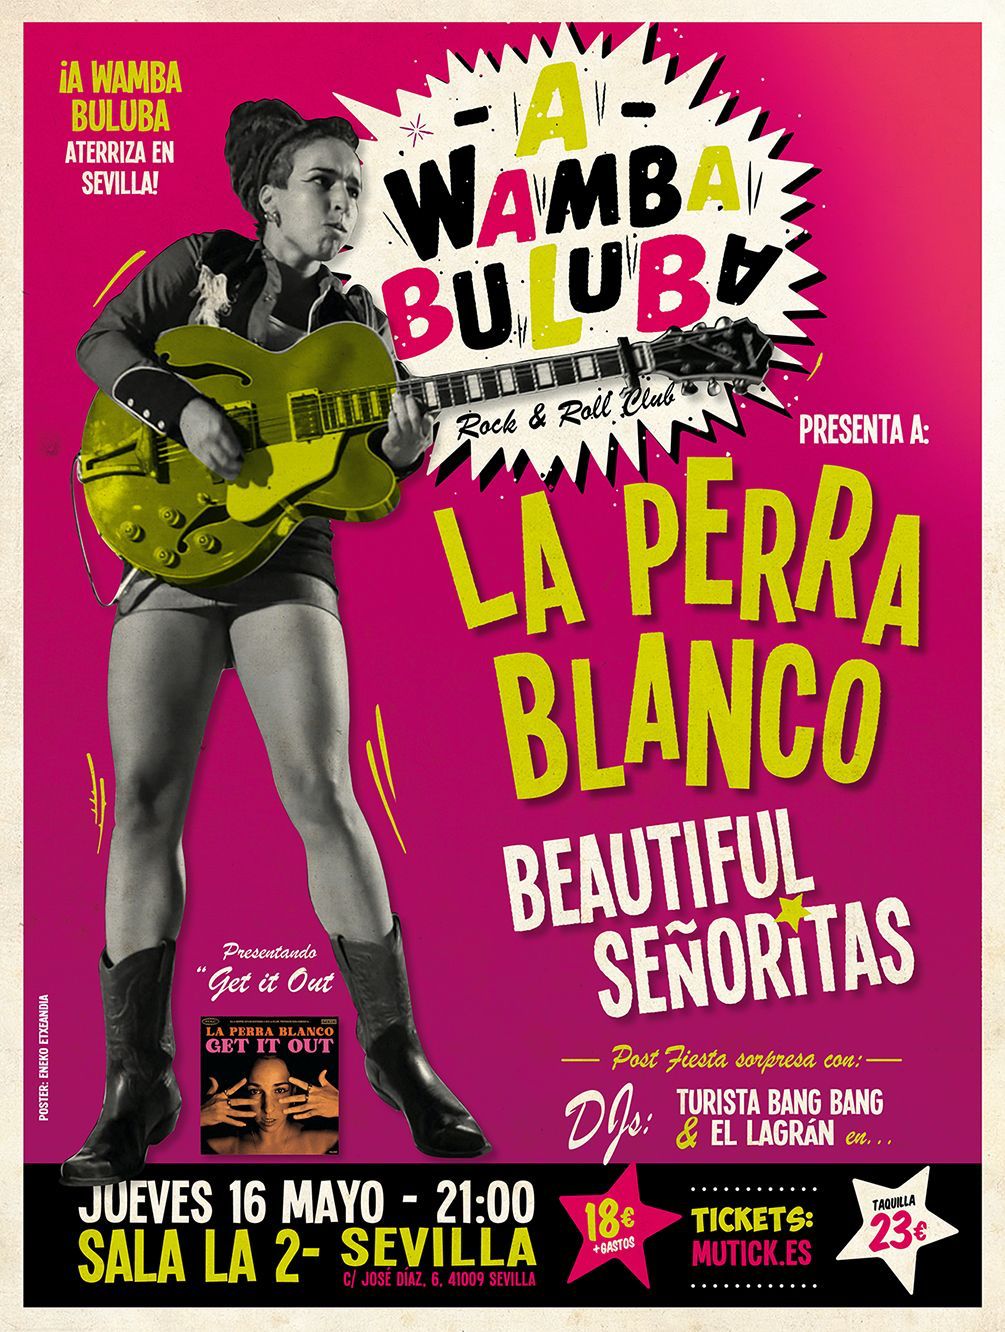 LA PERRA BLANCO + Beautiful Señorita en Sevilla - Mutick